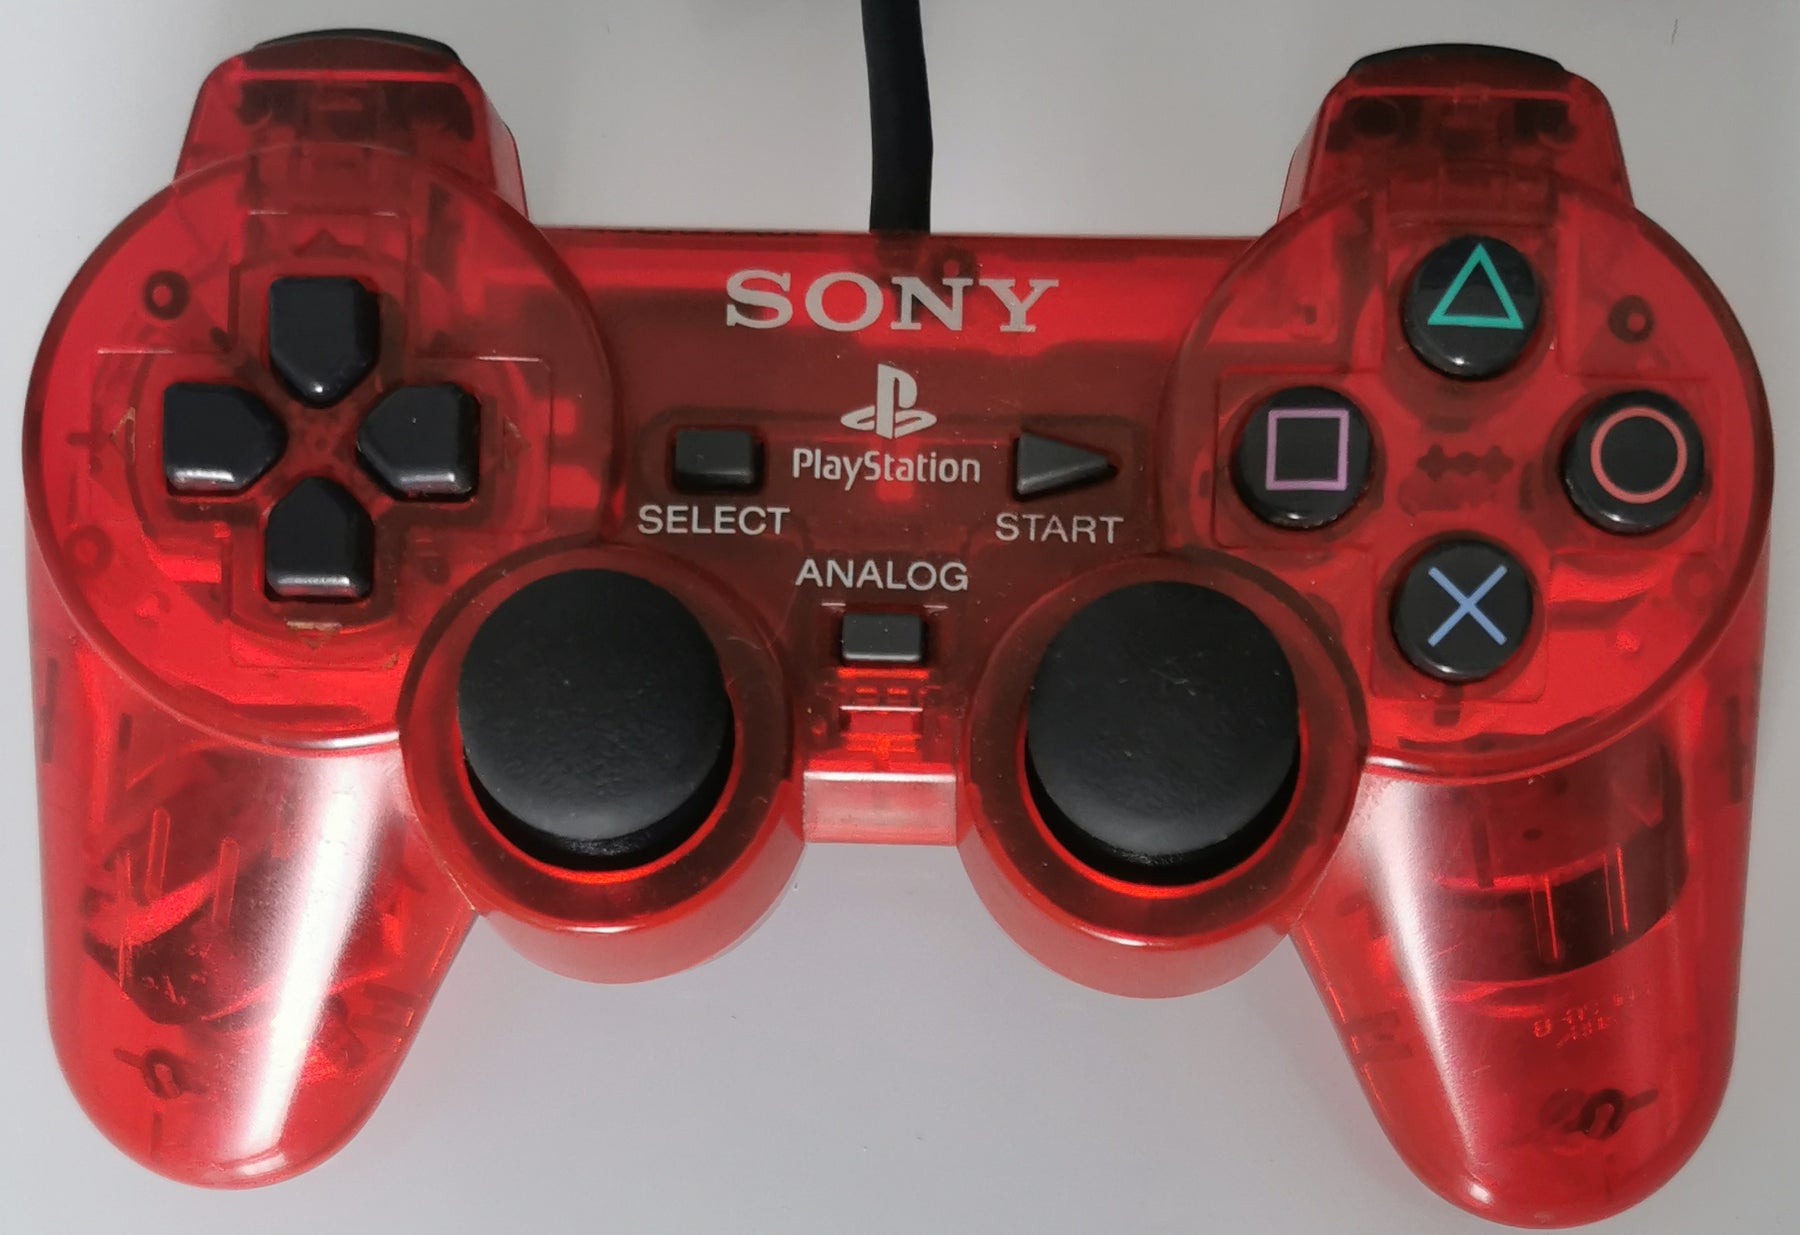 Analog Controller Dualshock 2 crimson red (Playstation 2) [Sehr Gut]